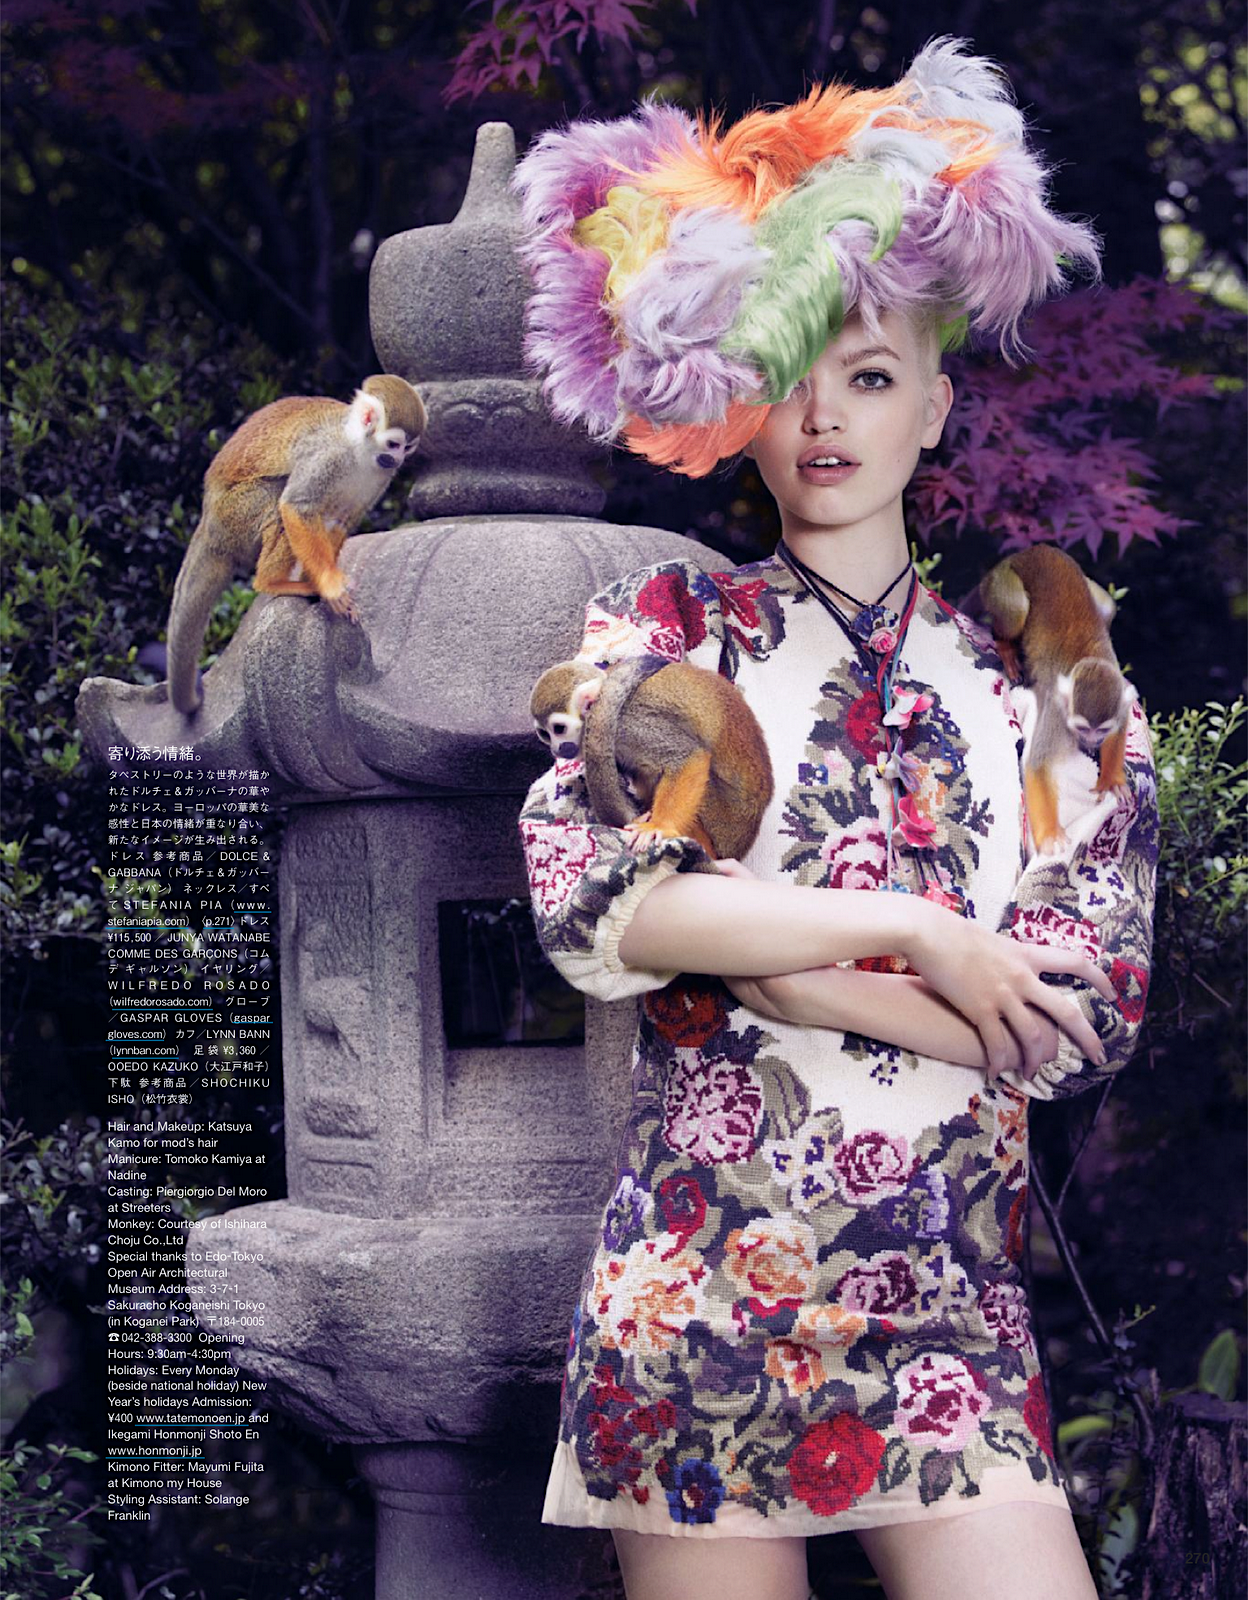 Daphne-Groeneveld-by-Mark-Segal-Vogue-Japan-November-2012-16.png